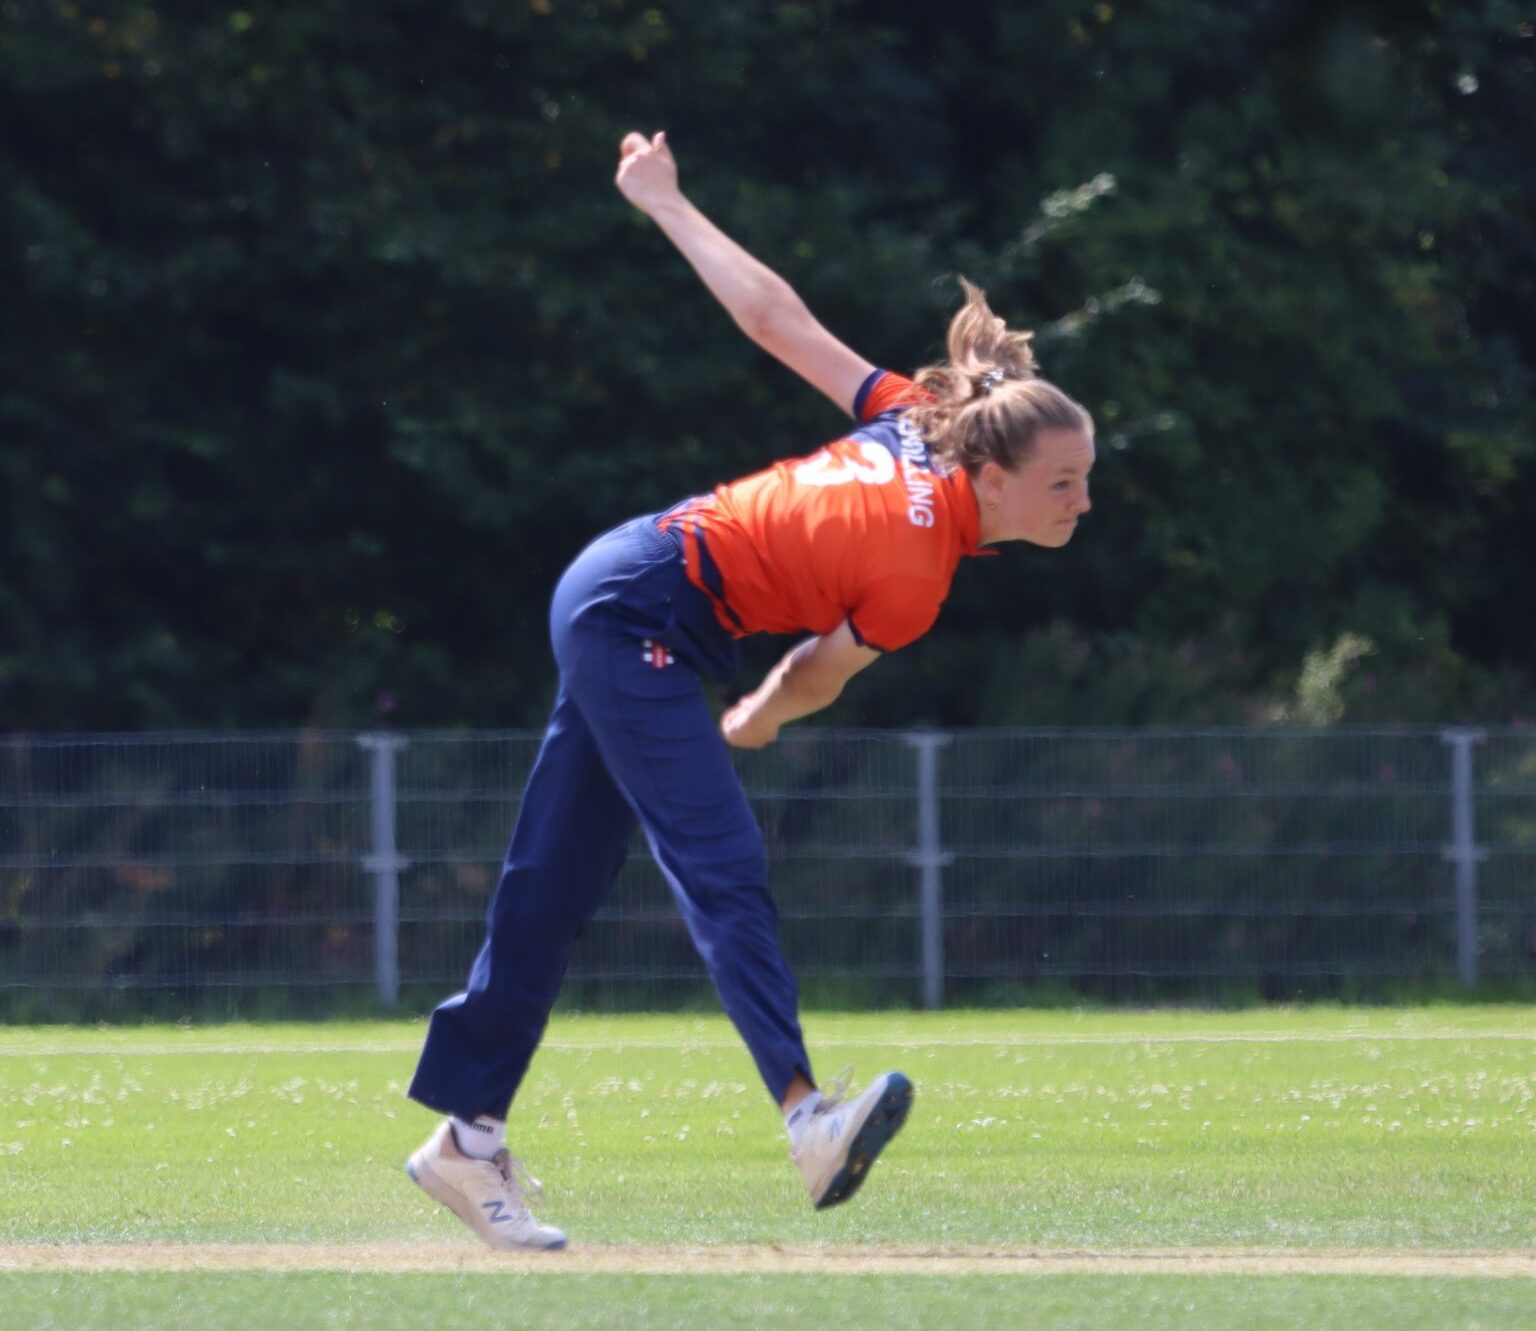 Women's cricket returns to Dutch top club HCC